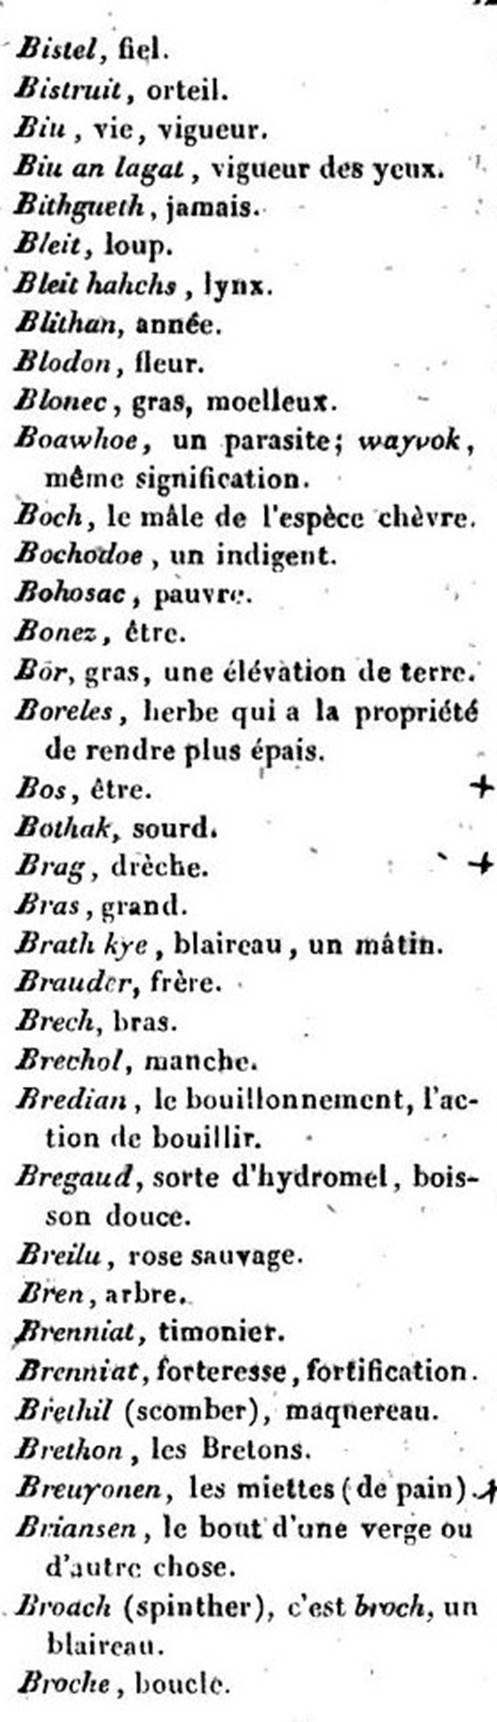 F3836b_antoine-matthieu-sionnet_1808-1856_langue-bretonne_426.jpg